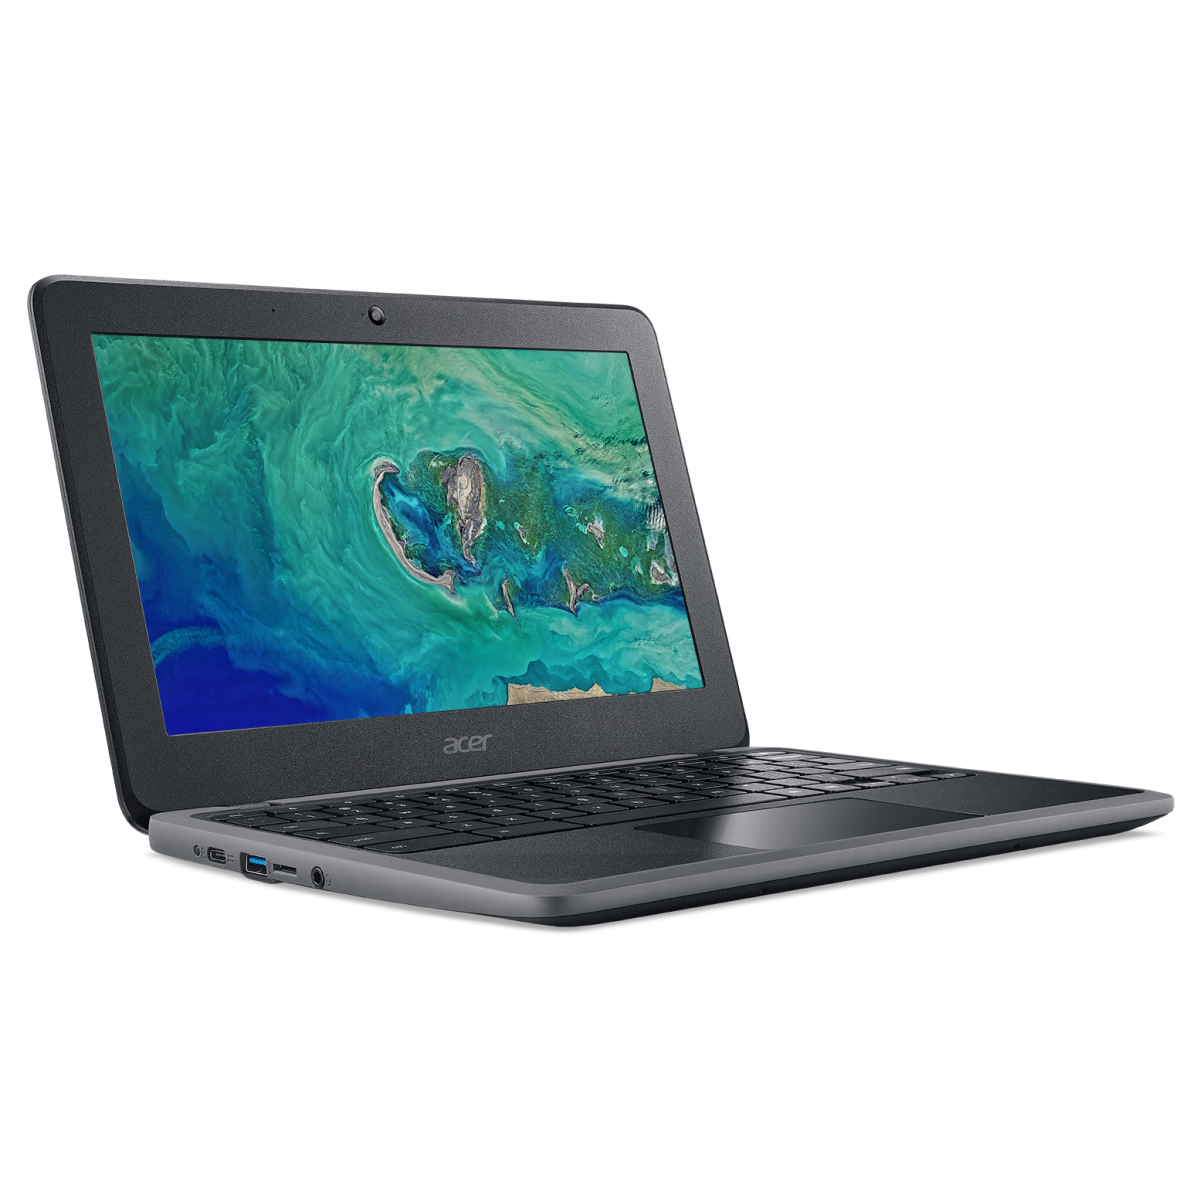 Acer Chromebook 11 - C732 - Celeron N3450/4GB/32GB eMMC - Chrome 